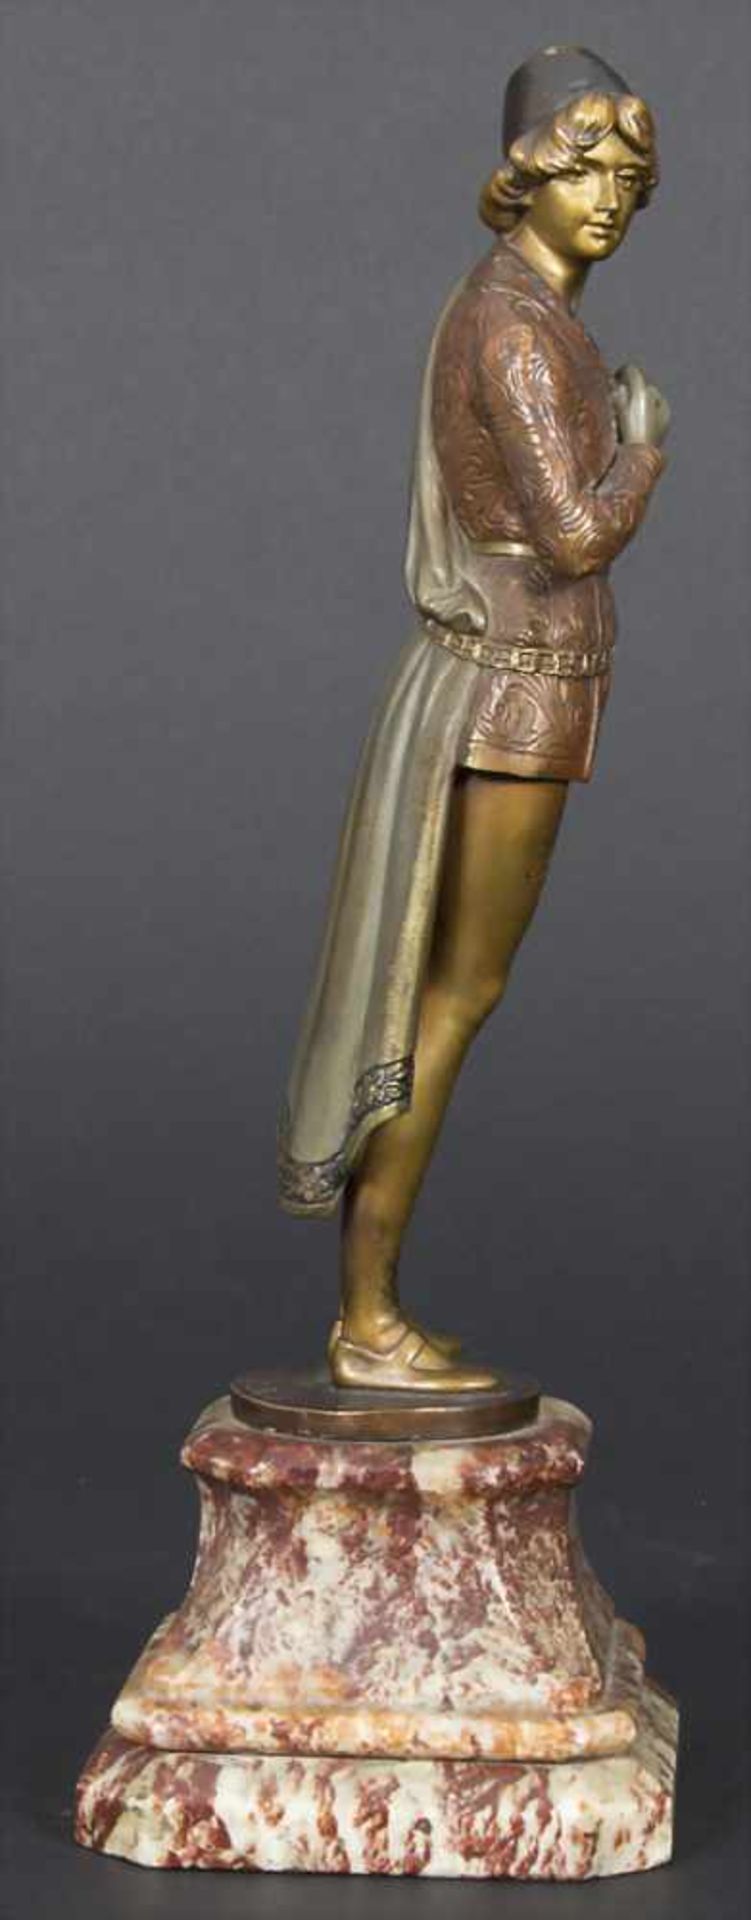 Jugendstil Skulptur, Adliger-Jüngling, Keck Hans (1875-1941)Material: Bronze, polychrom patiniert, - Image 4 of 6